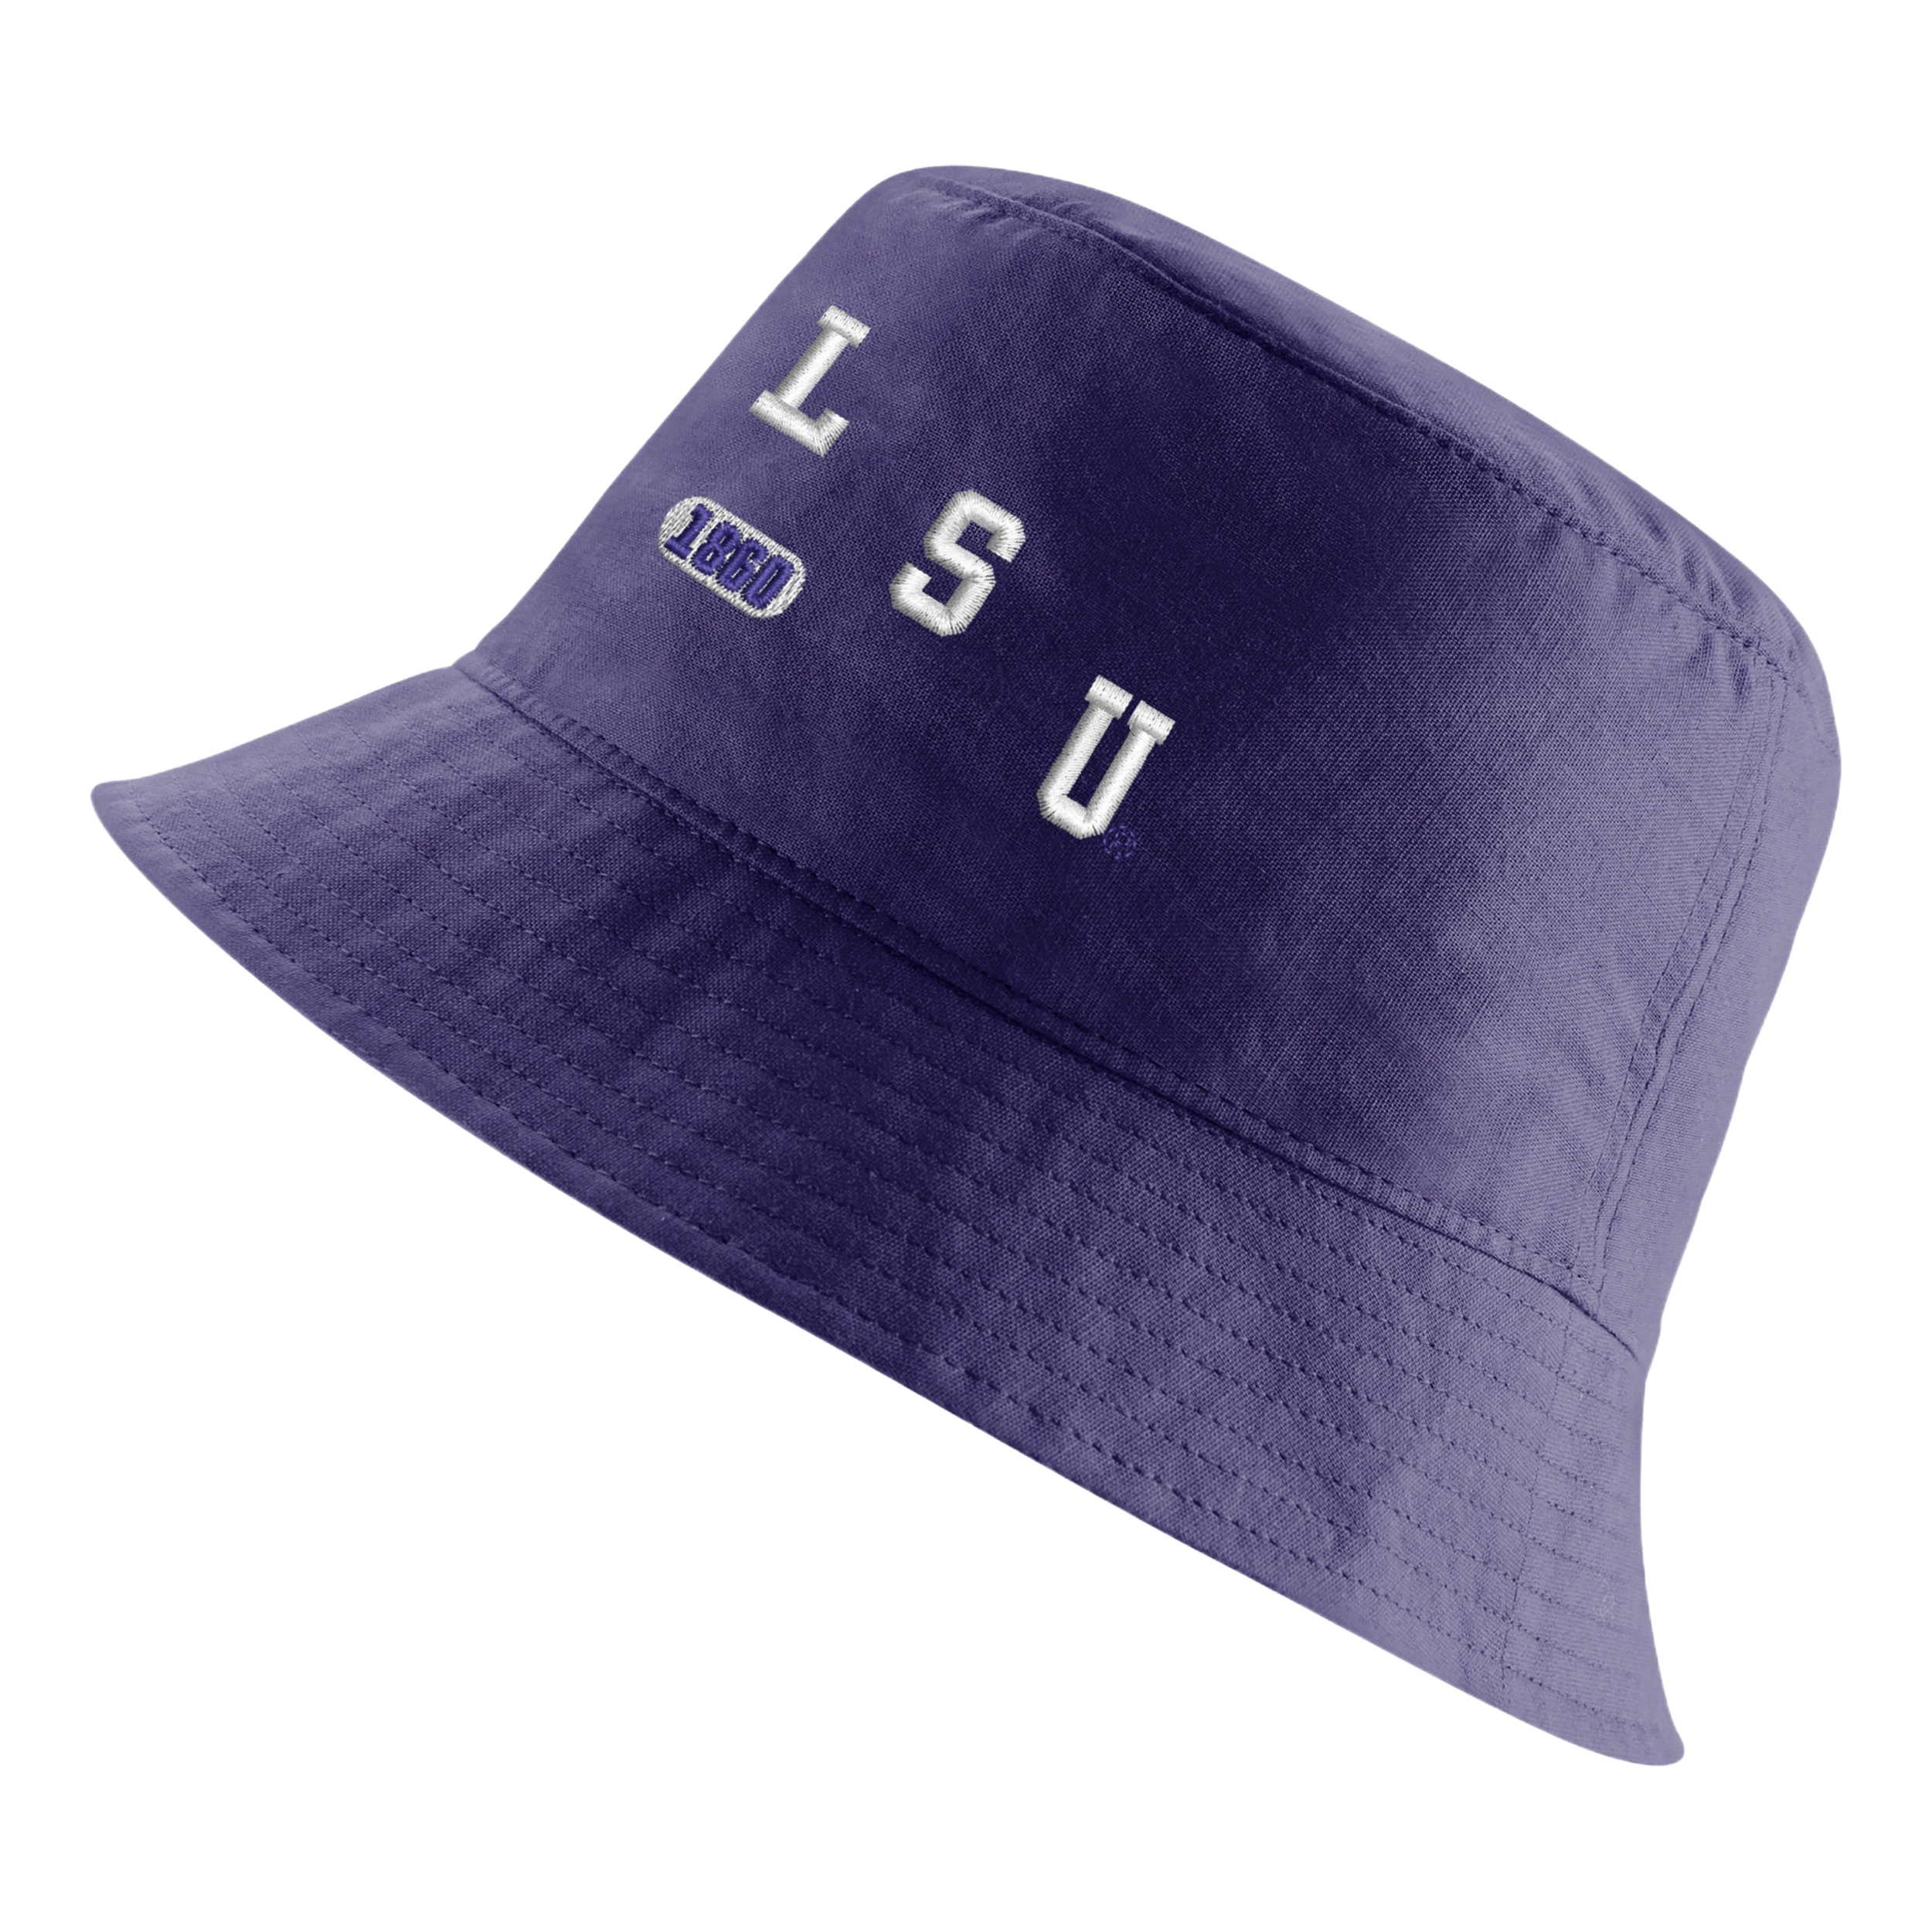 Nike Lsu  Unisex College Bucket Hat In Purple